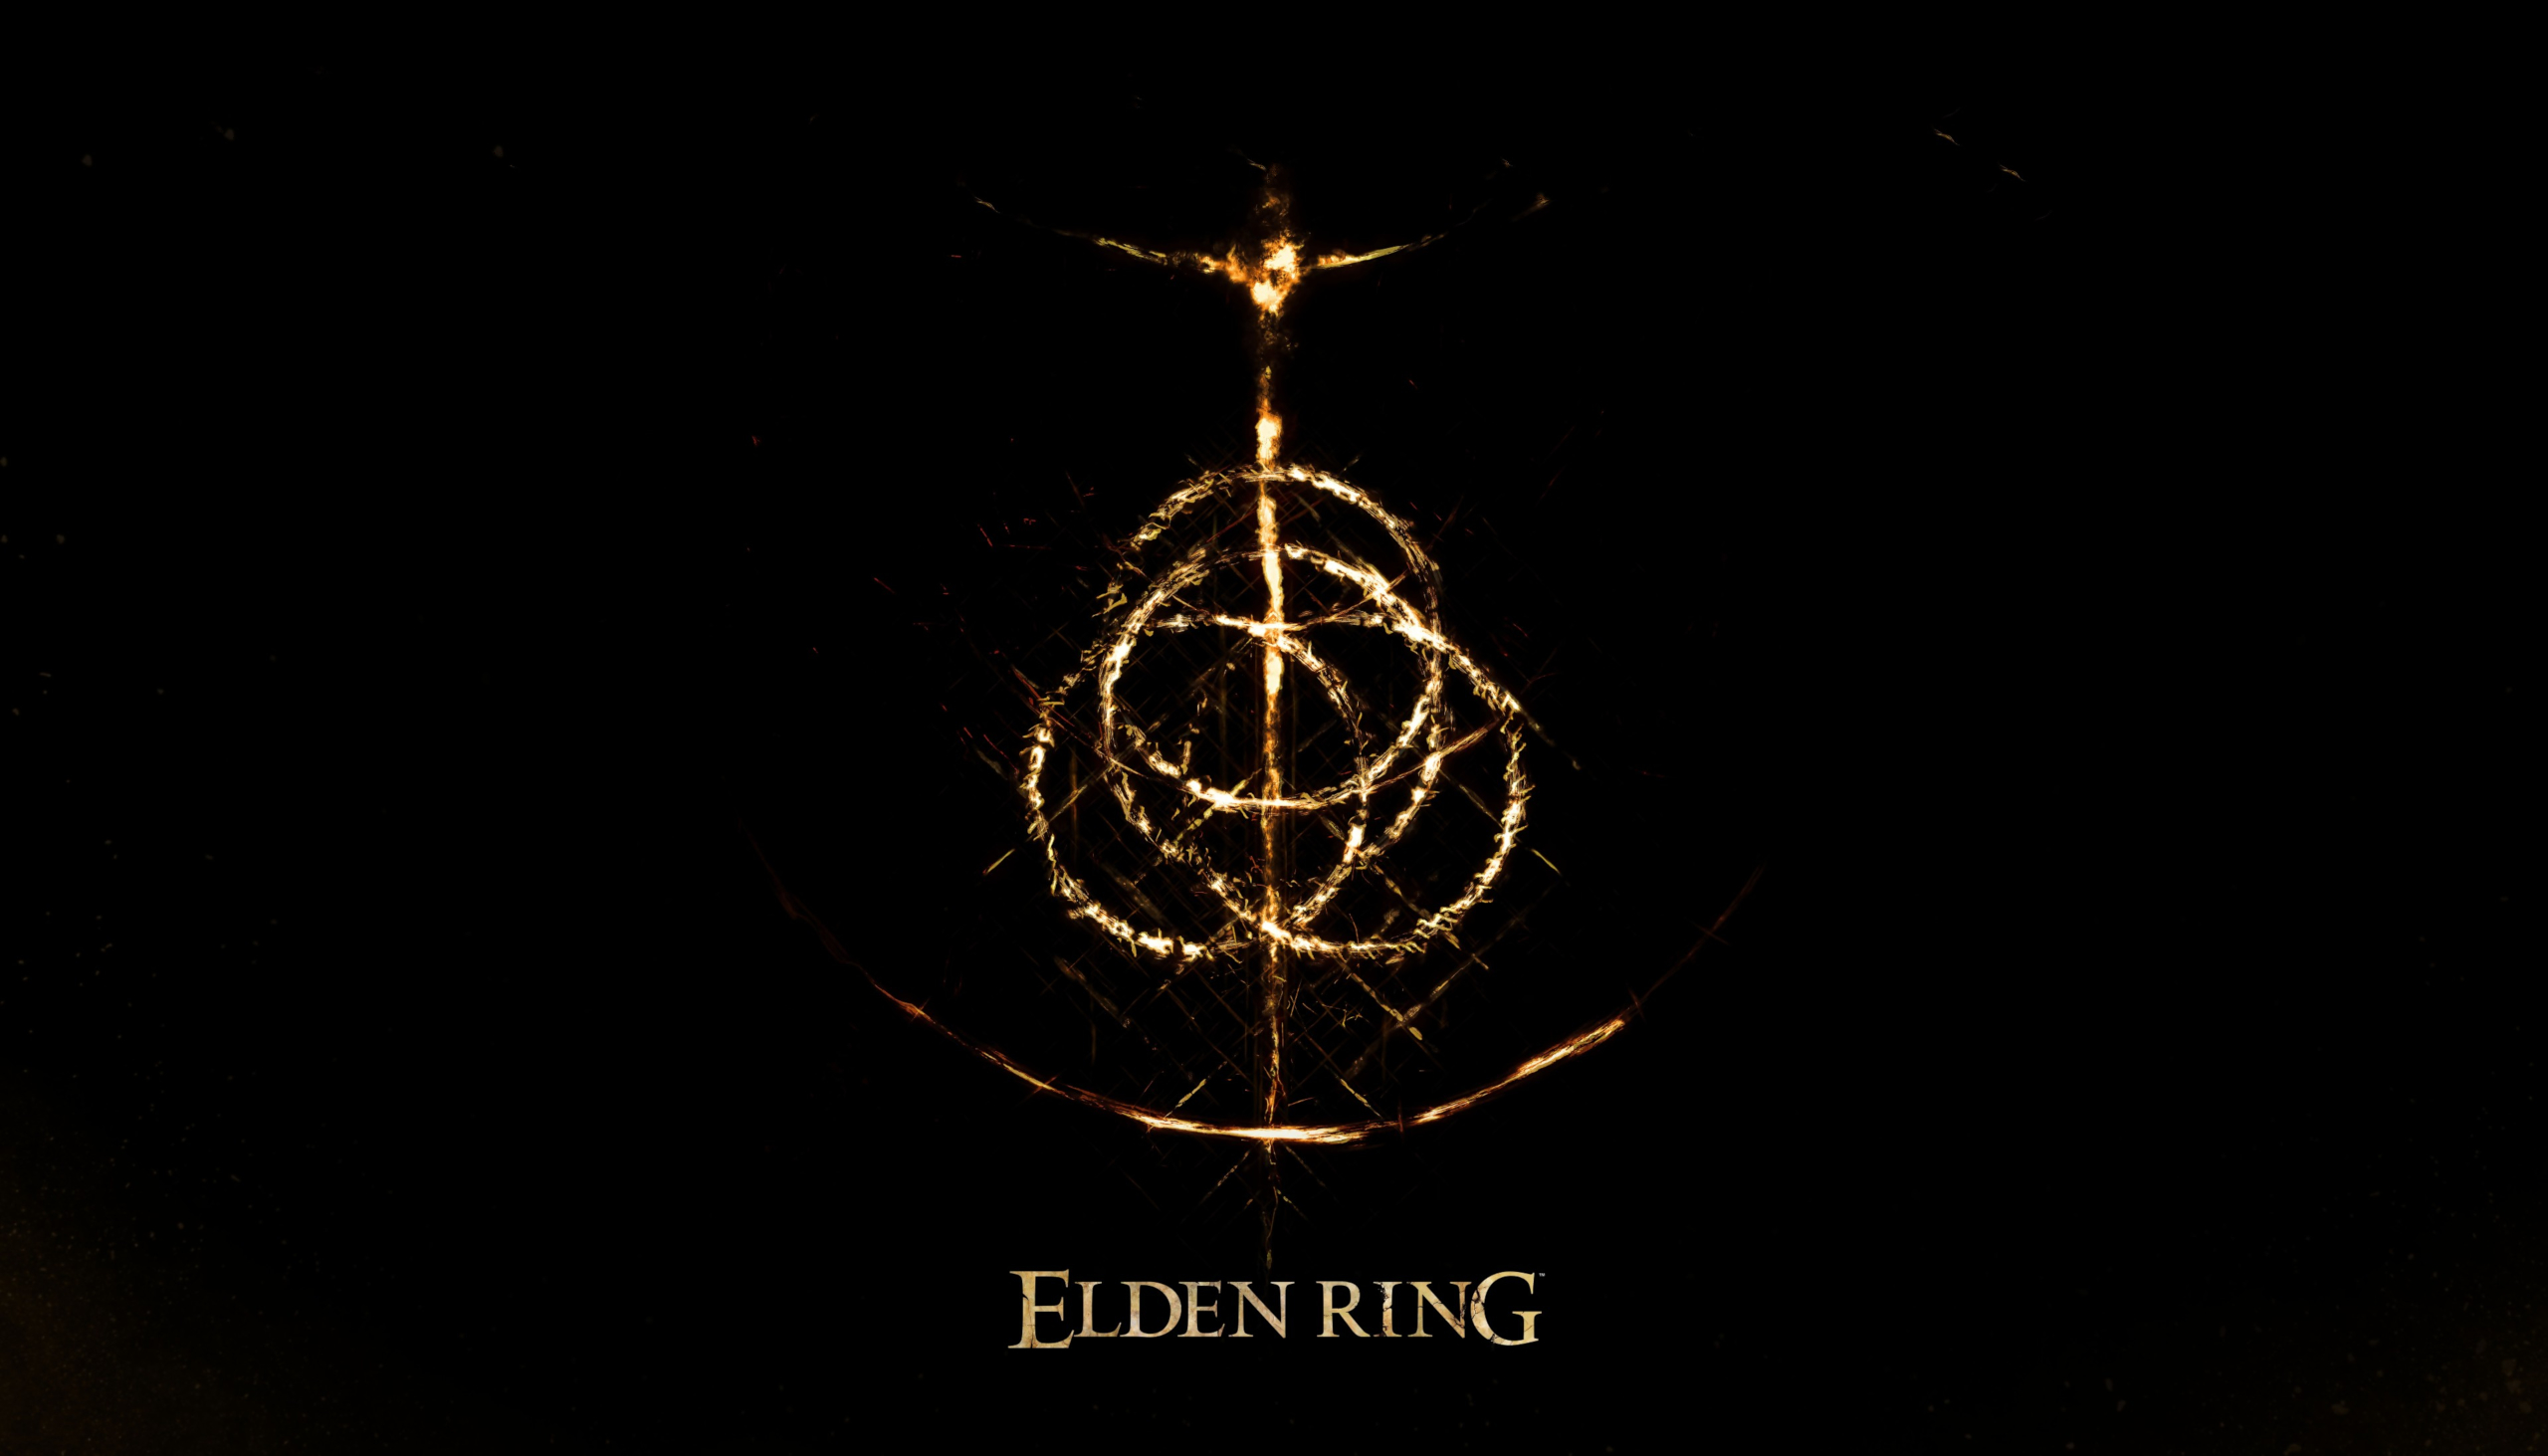 Elden ring Samurai wallpaper by Leoneying - Download on ZEDGE™